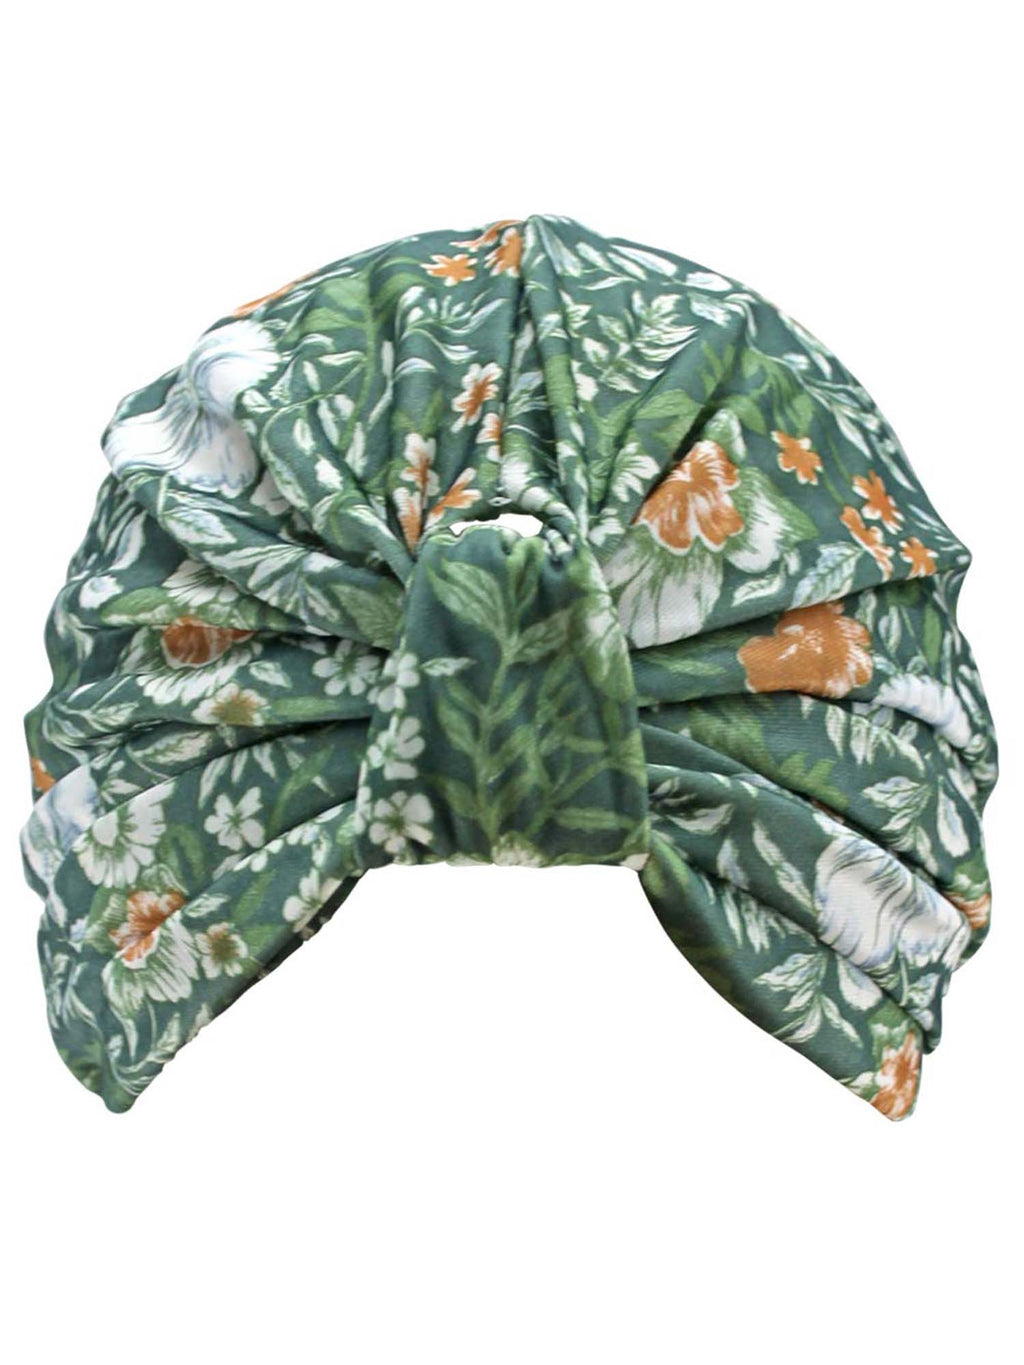 Green Floral Leaf Print Turban Head Wrap